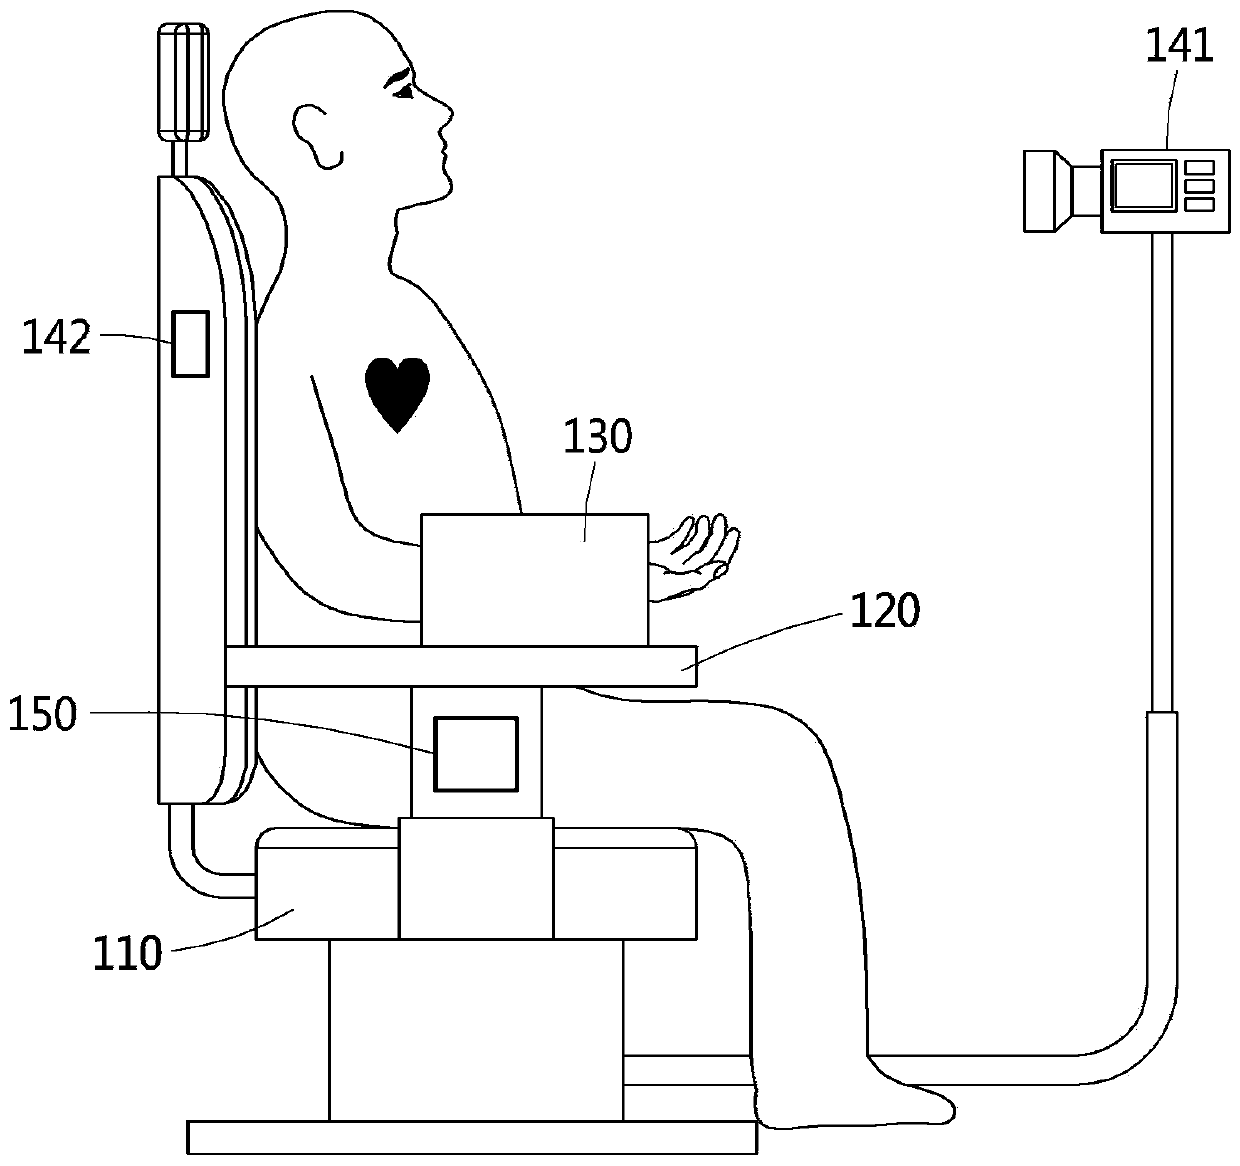 Blood pressure measurement device